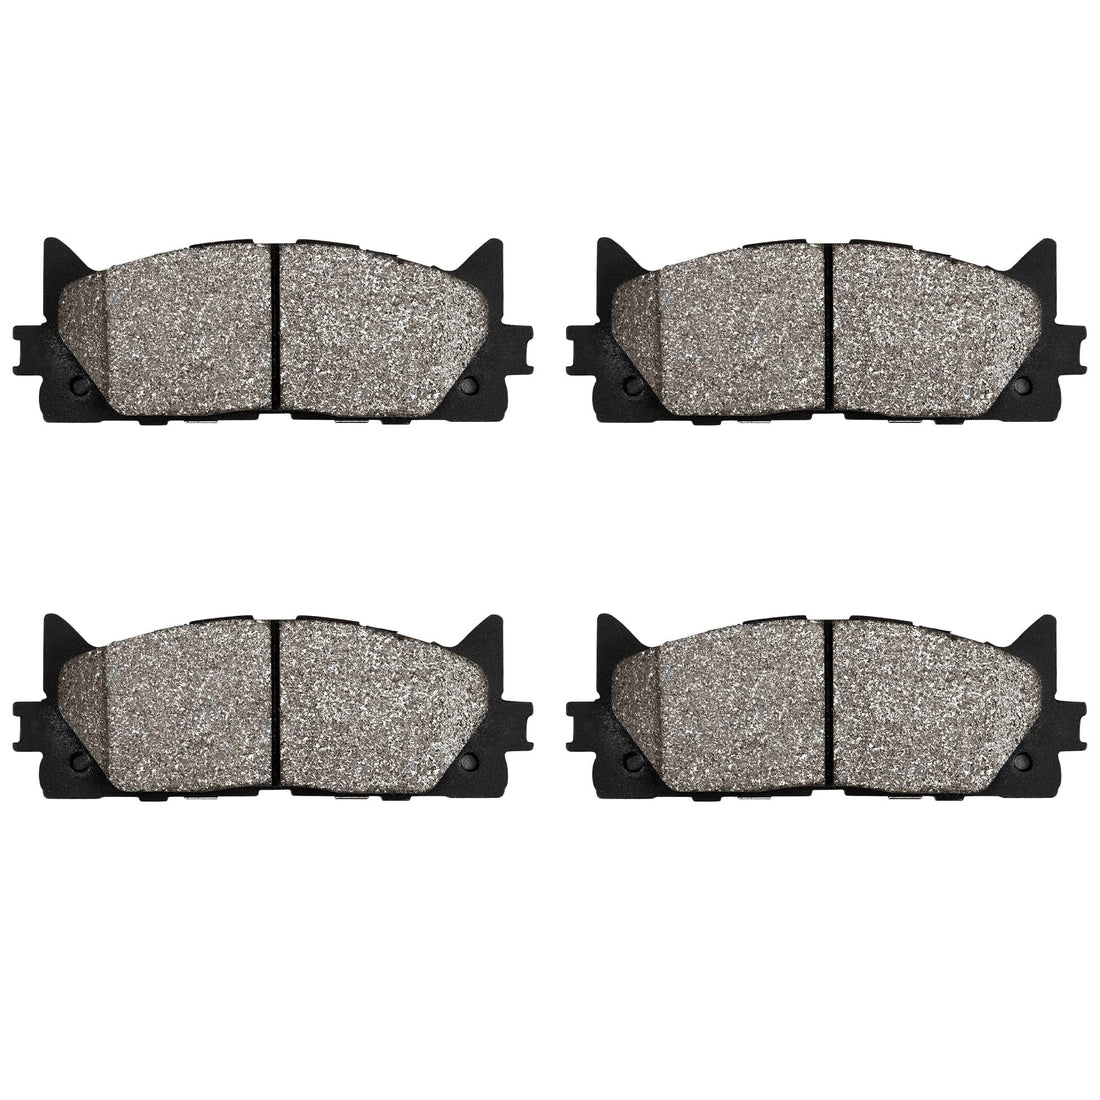 Front Brake Pads 4Pcs Premium Ceramic Replacement Brake Pad Set for Avalanche